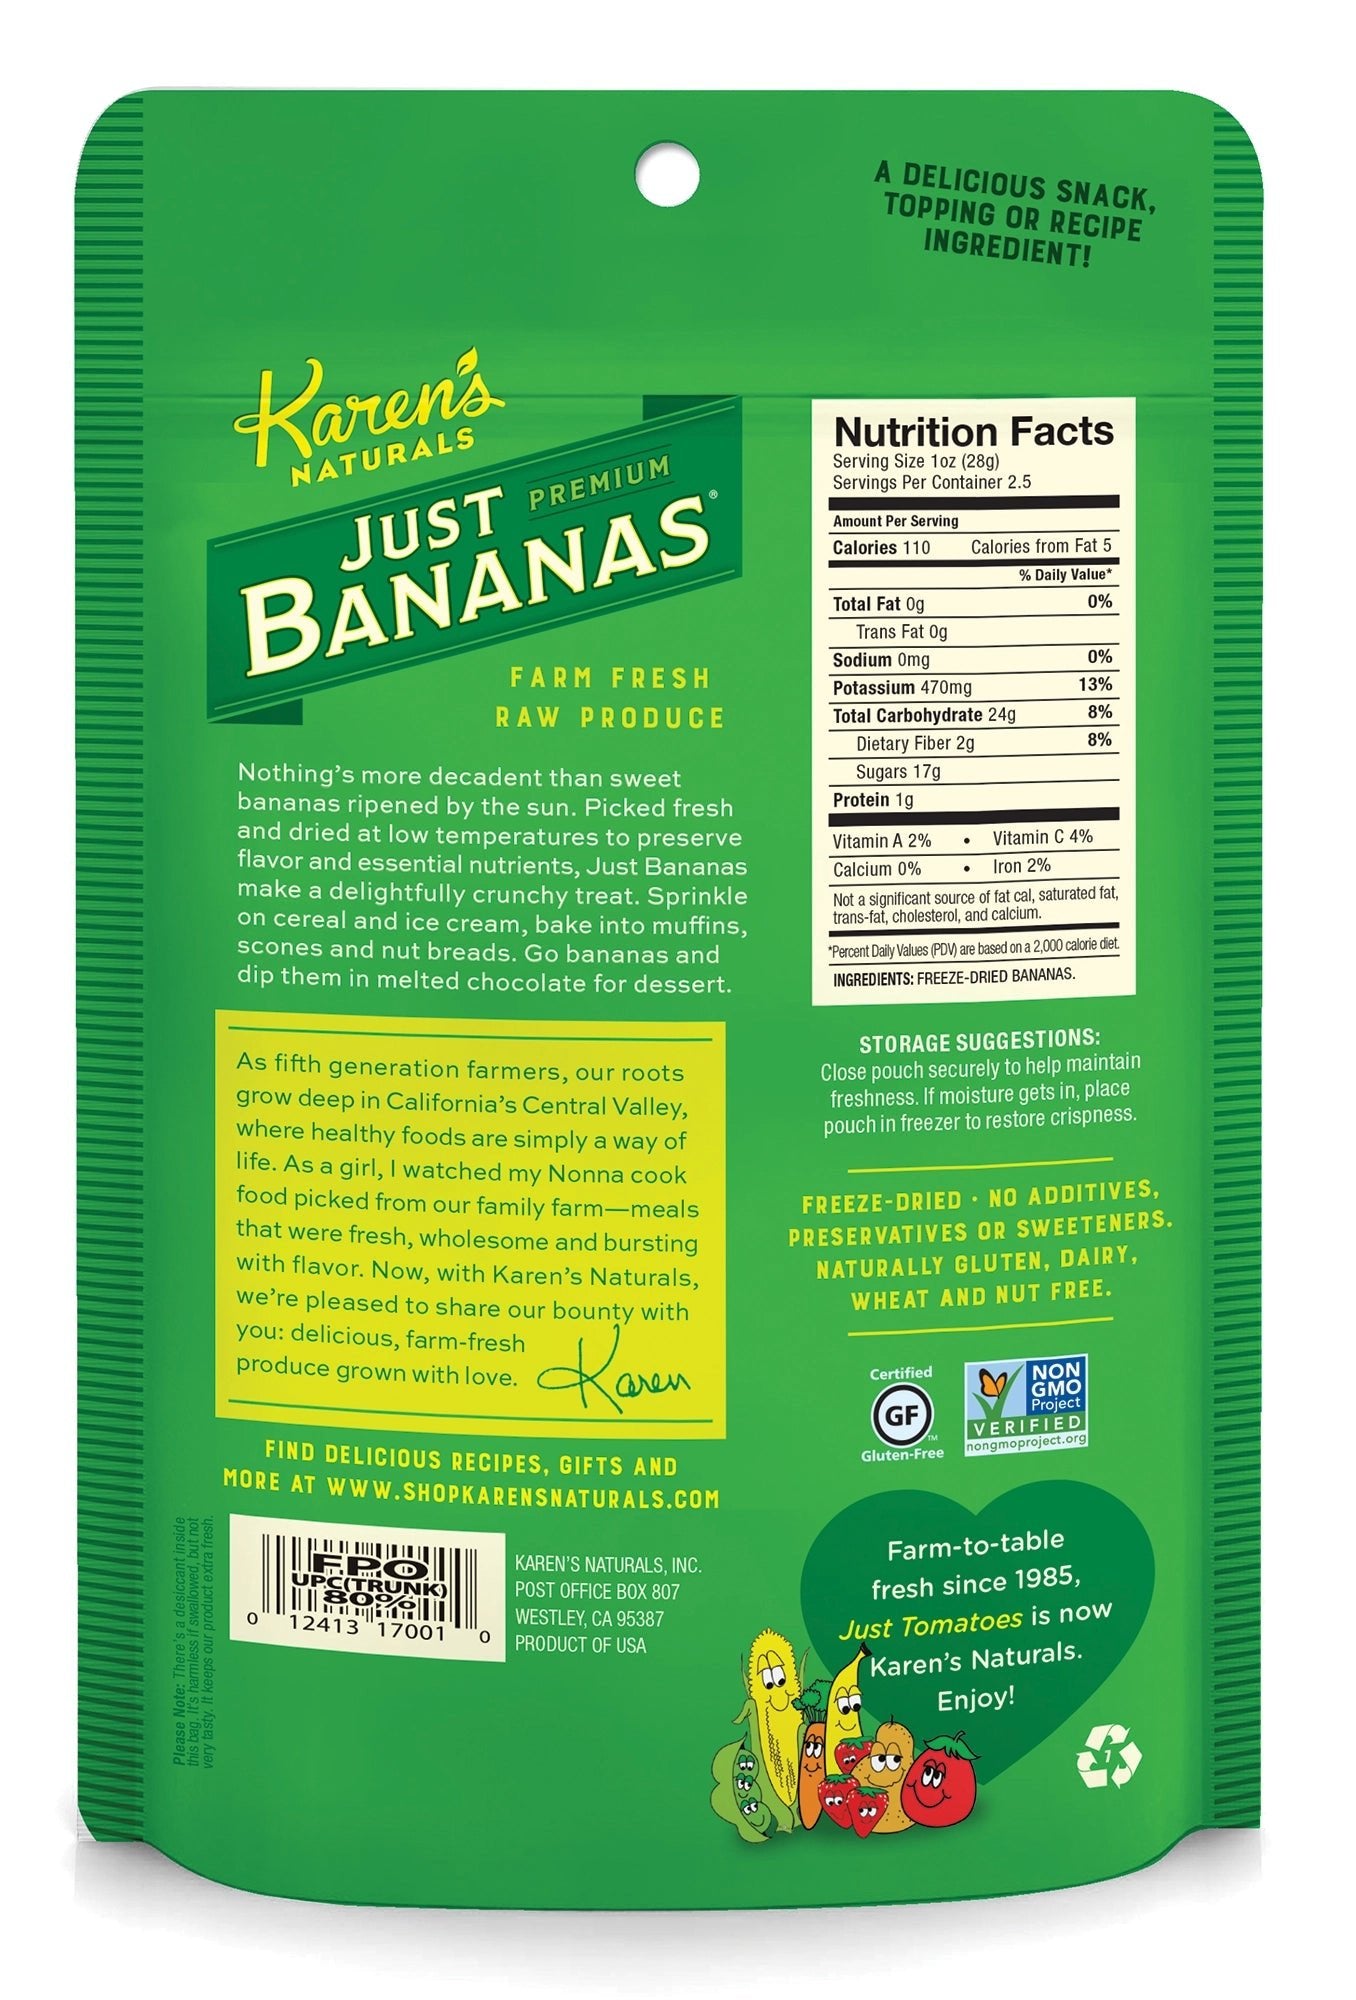 Just Bananas - Karen's Naturals